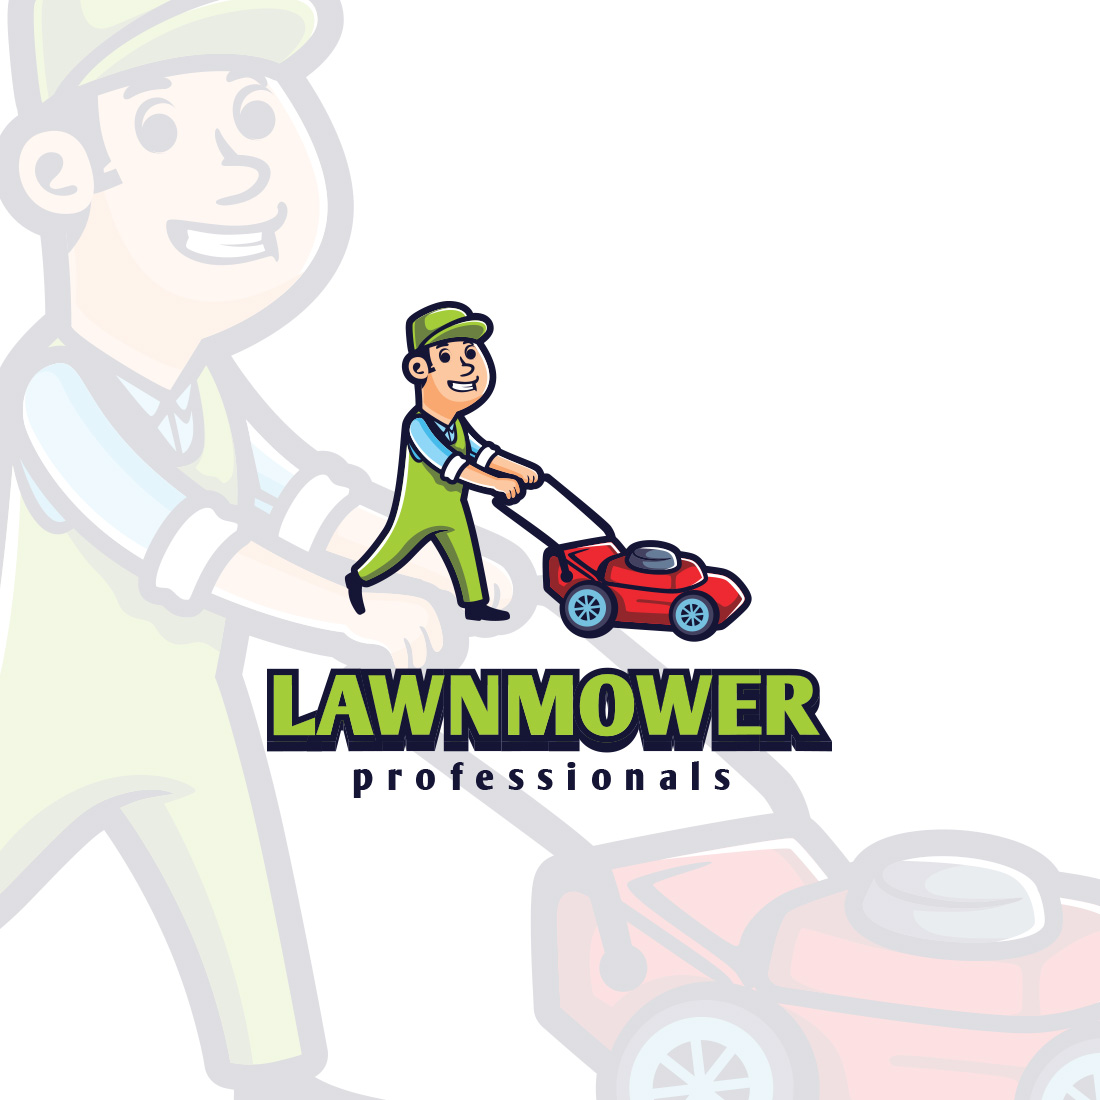 Lawnmower Profesional Logo Design cover image.